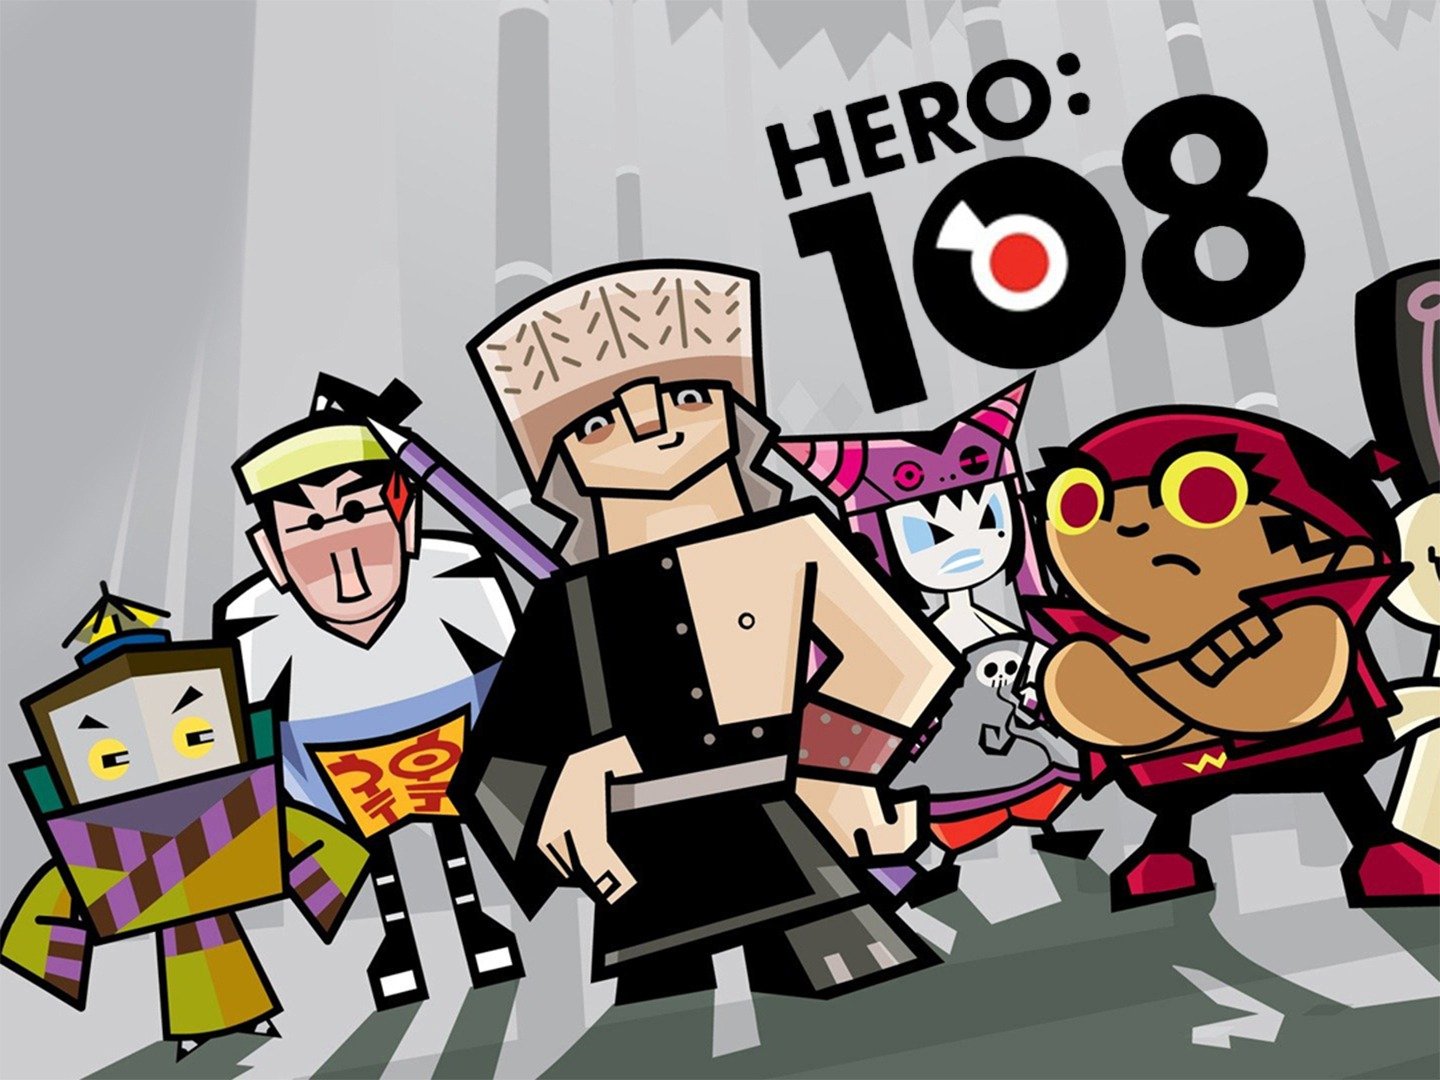 Hero 108 characters